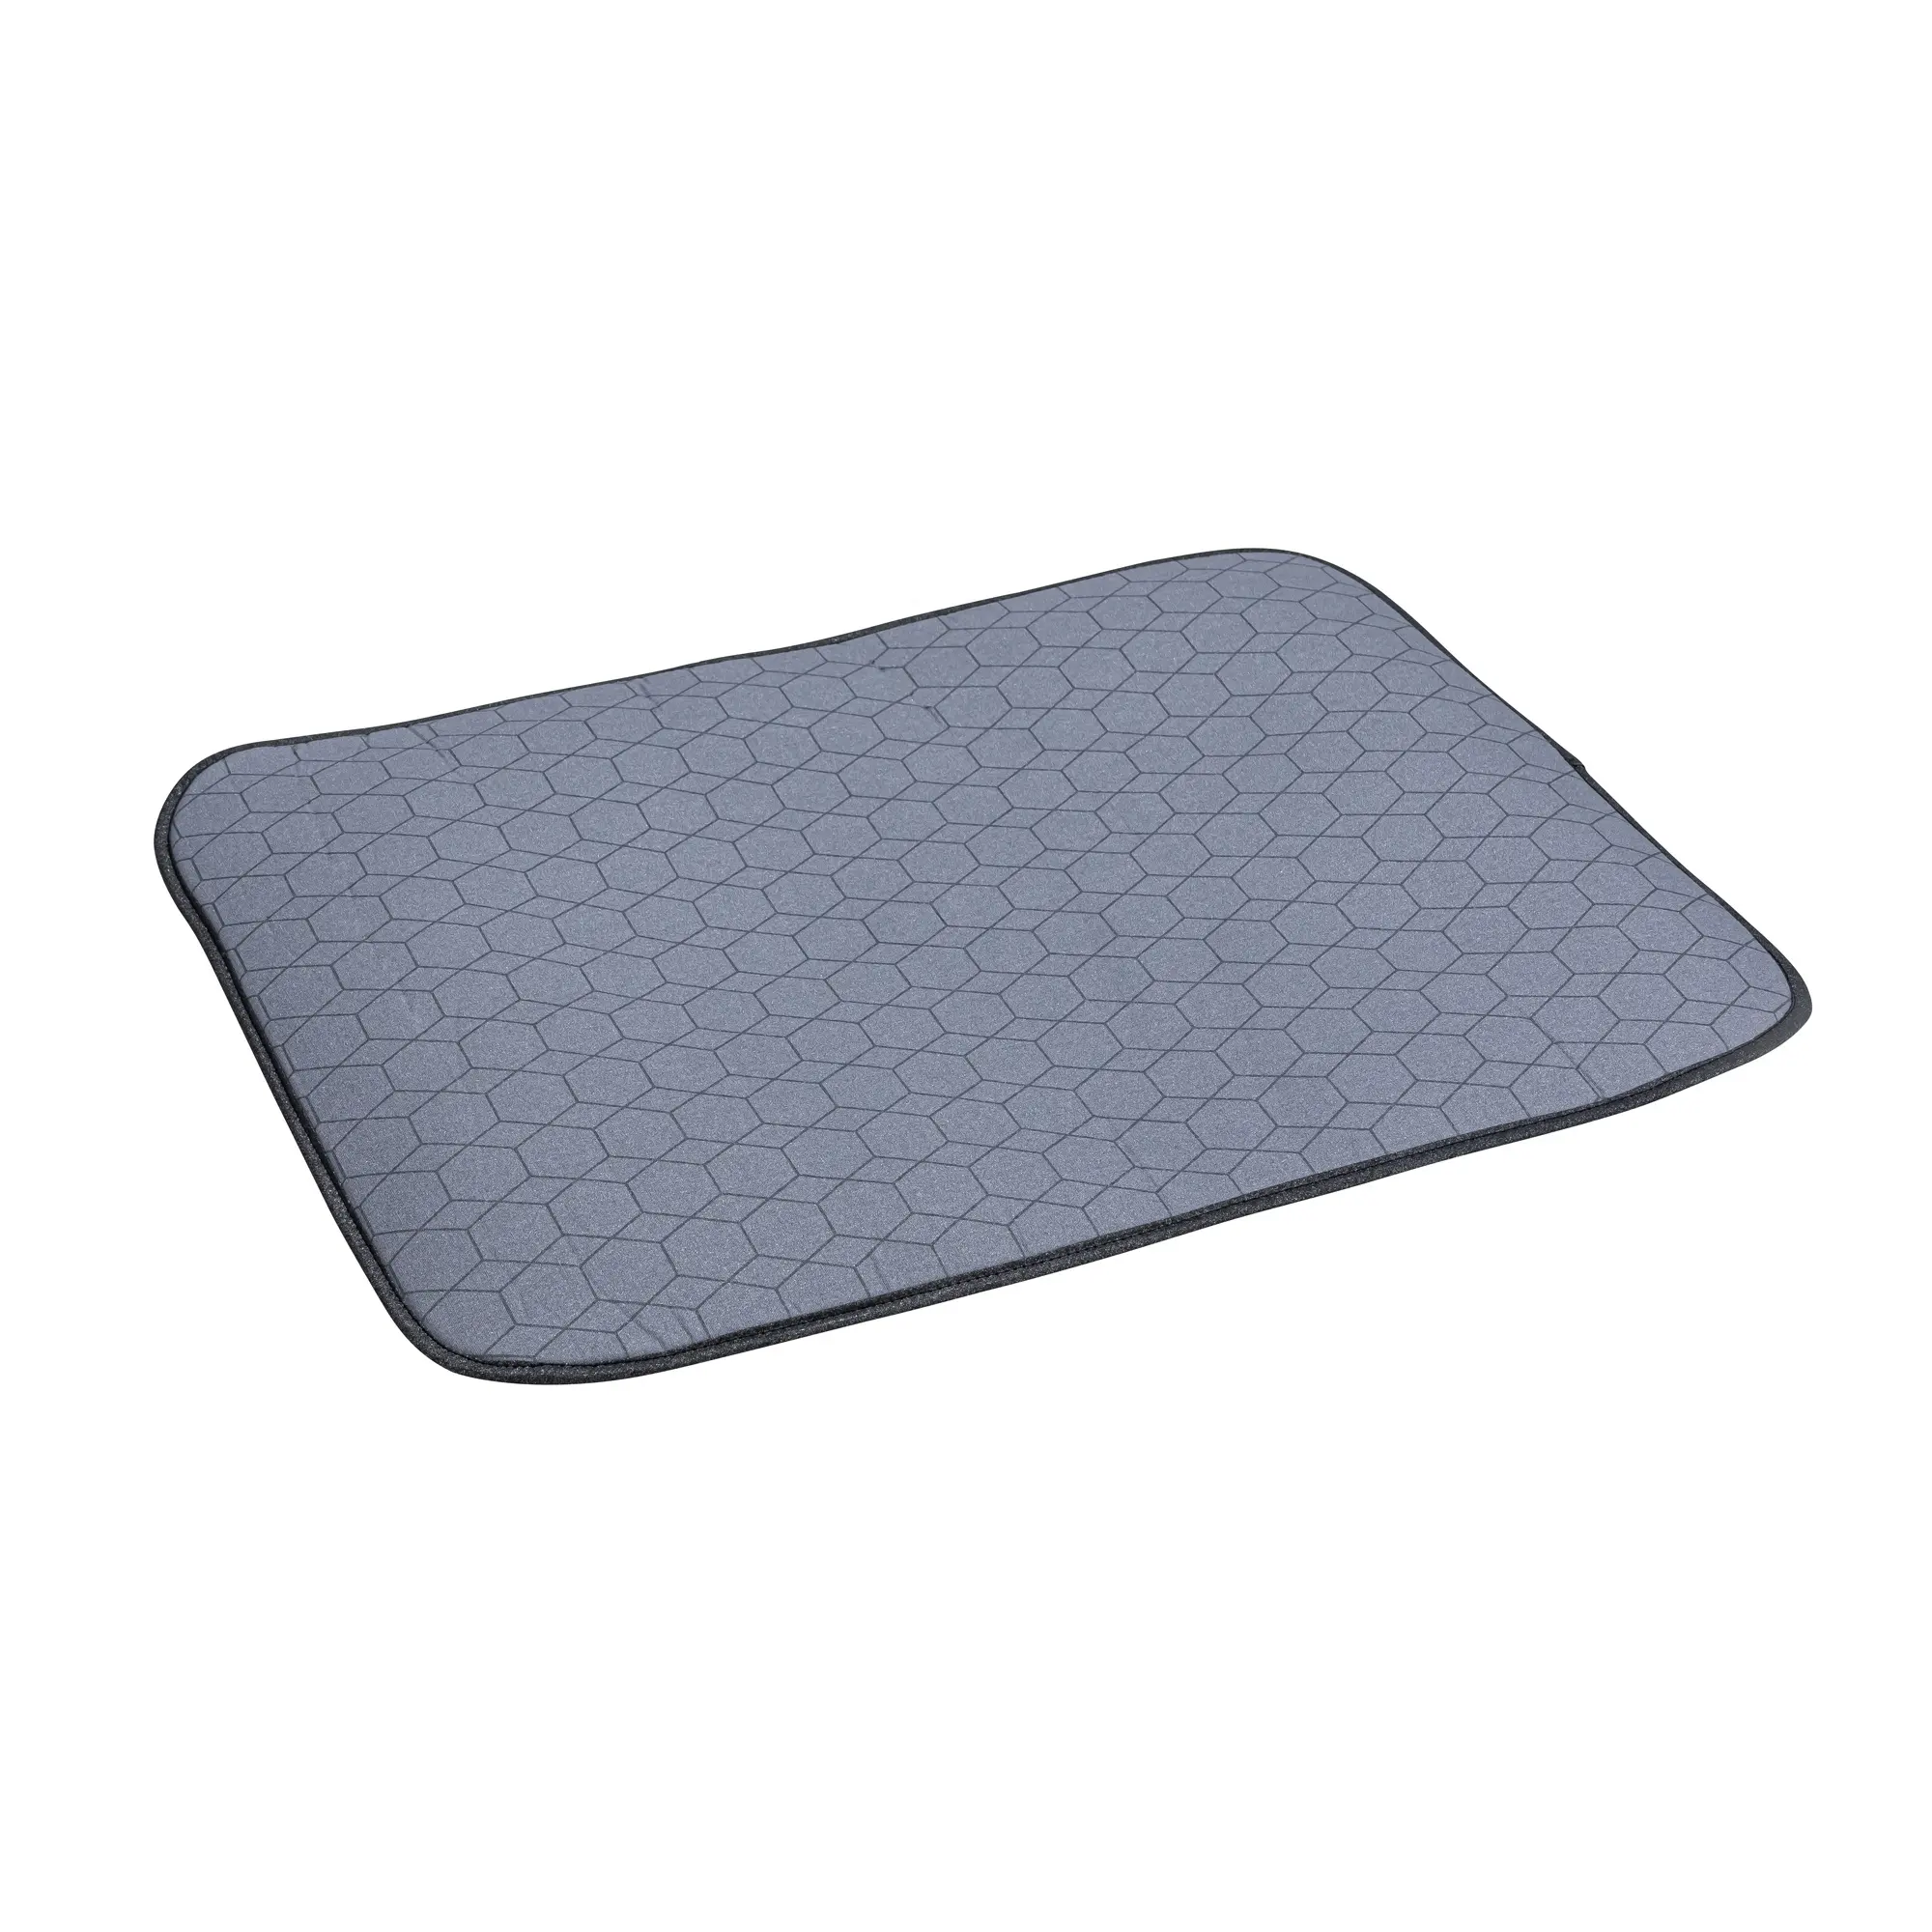 Portable heat resistant ironing mat travel folding pad